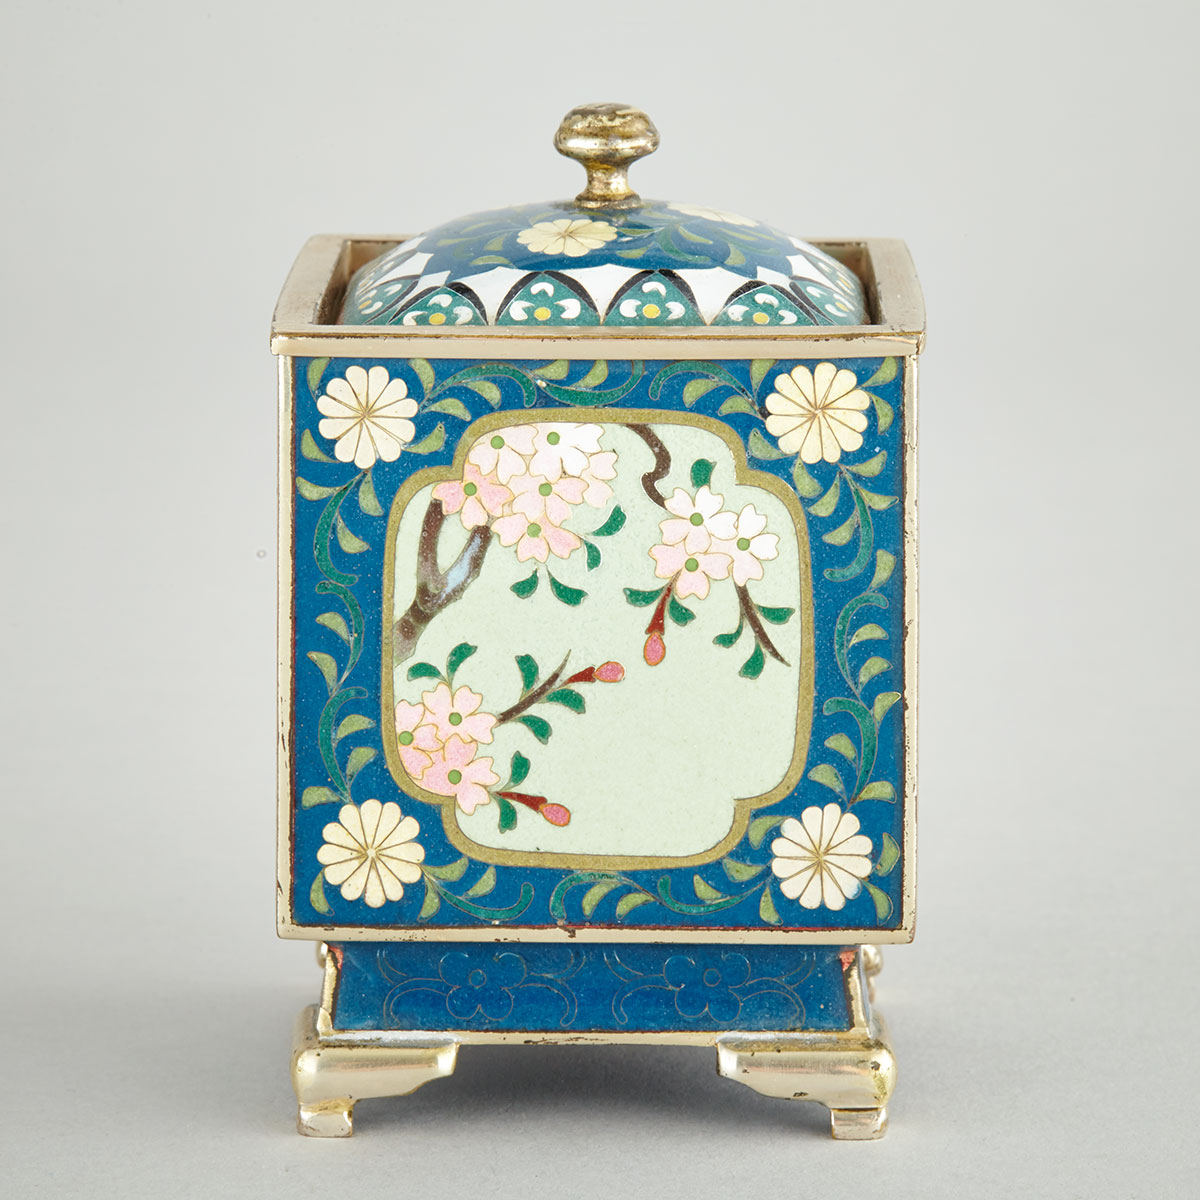 Small Cloisonné Enamel Box and Cover, Inaba Company, Meiji Period, Circa 1900